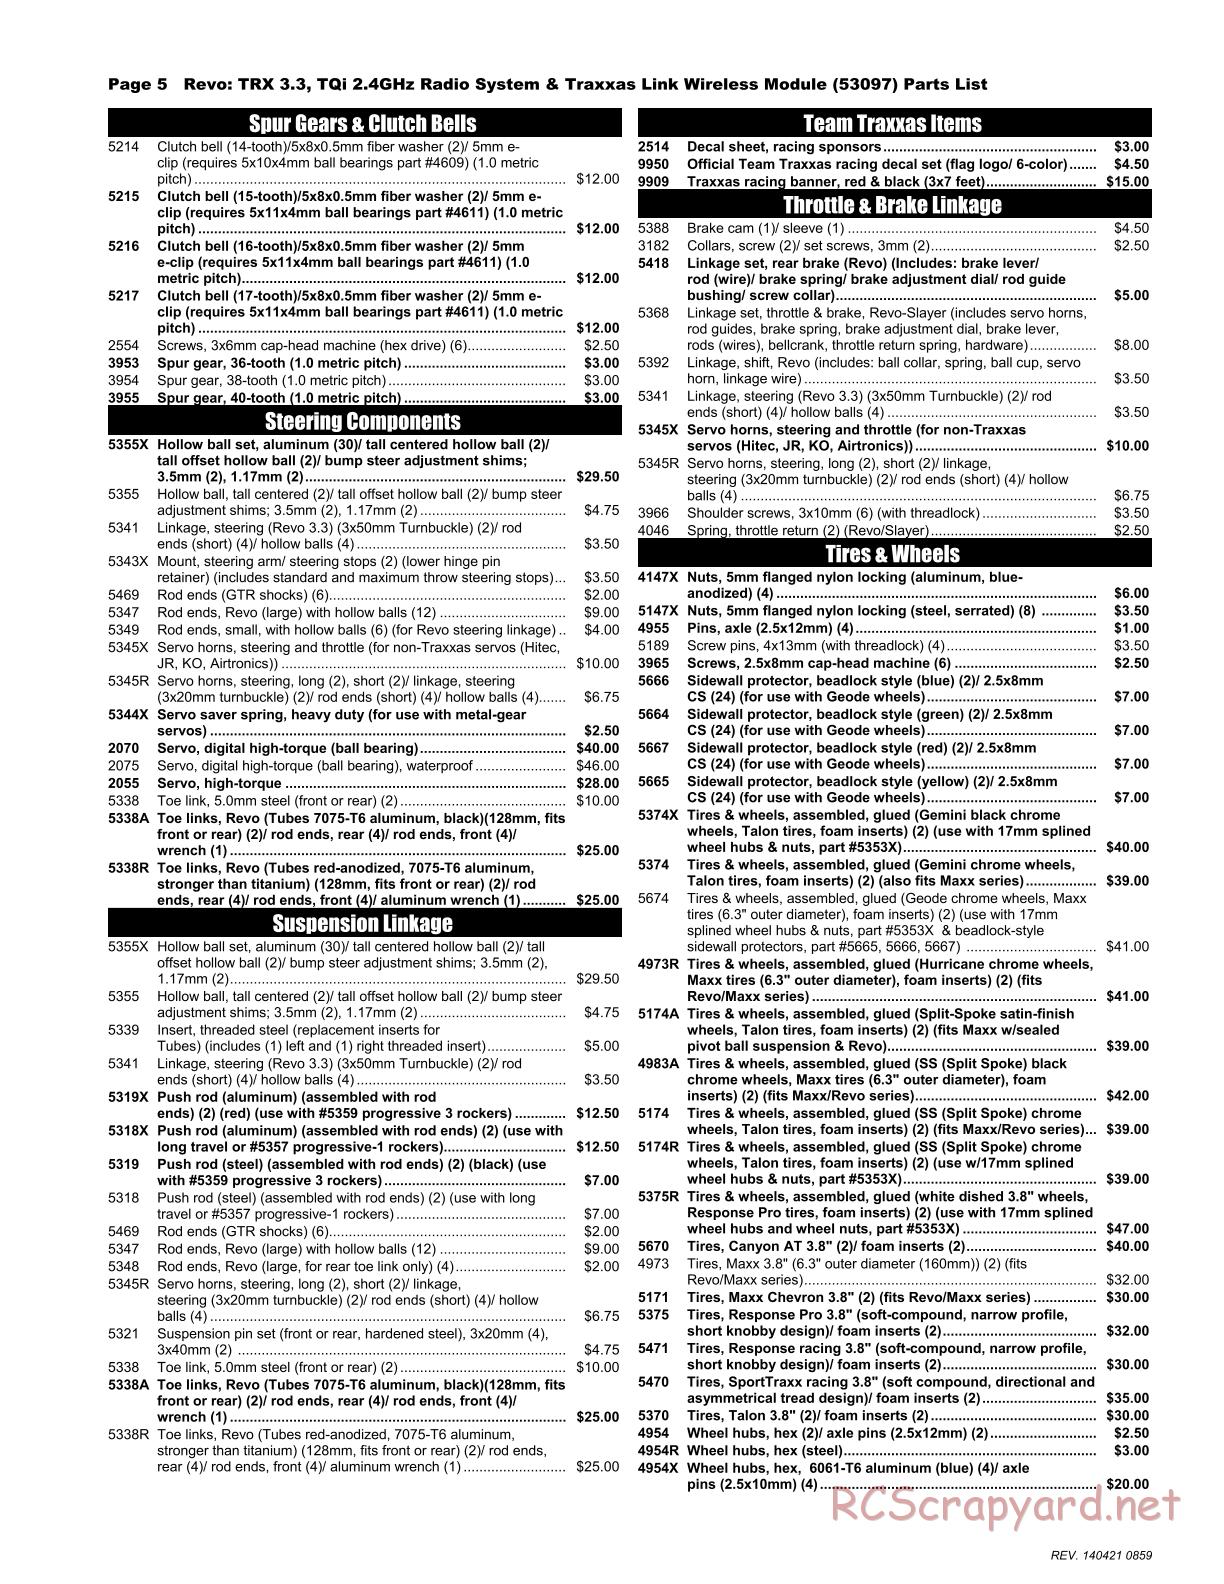 Traxxas - Revo 3.3 (2014) - Parts List - Page 5